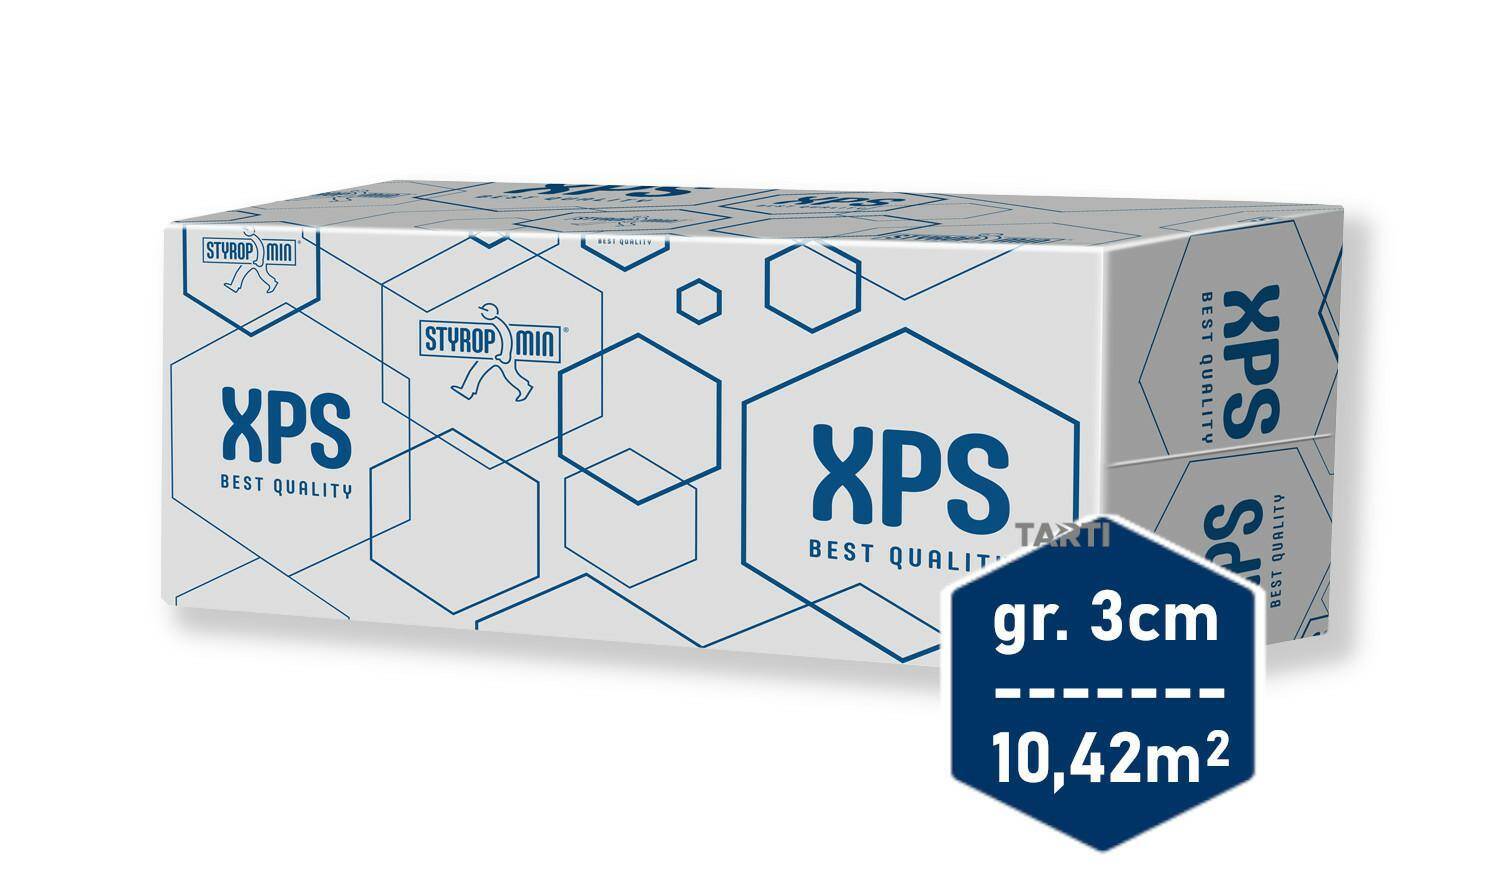 Styropmin XPS-200 gr.3cm gładki